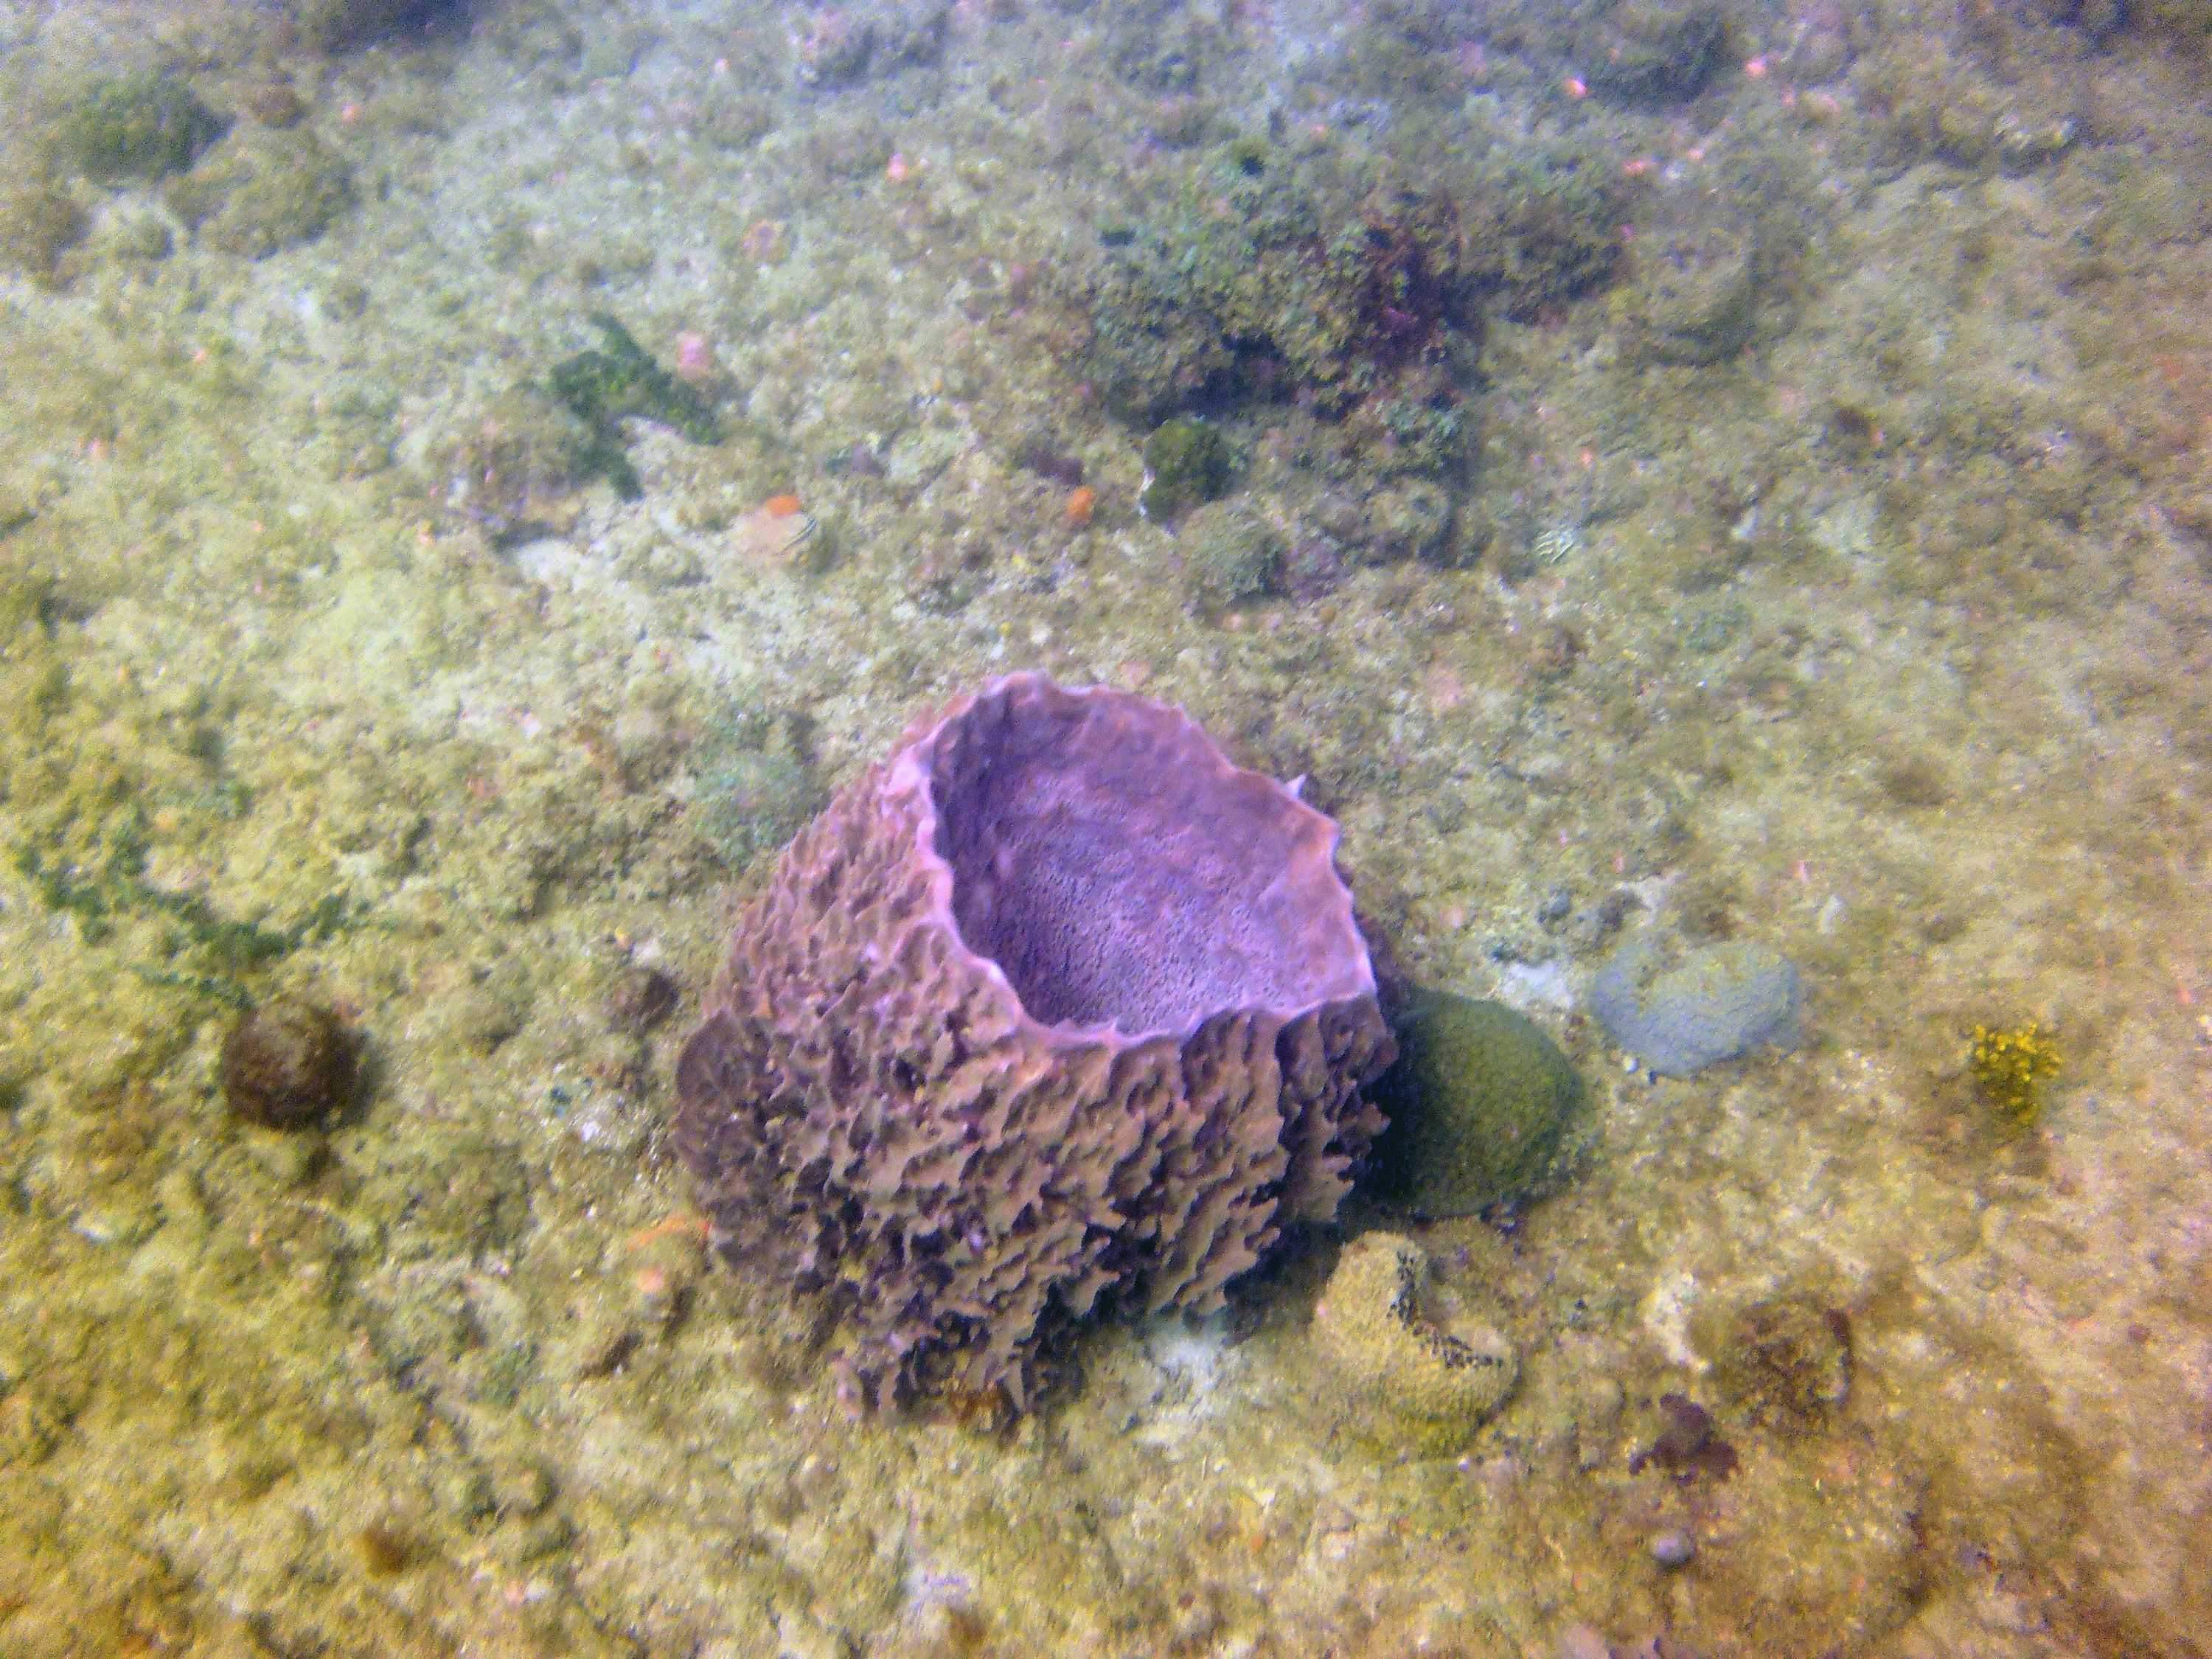 El Natural Reef, Aguadilla, PR